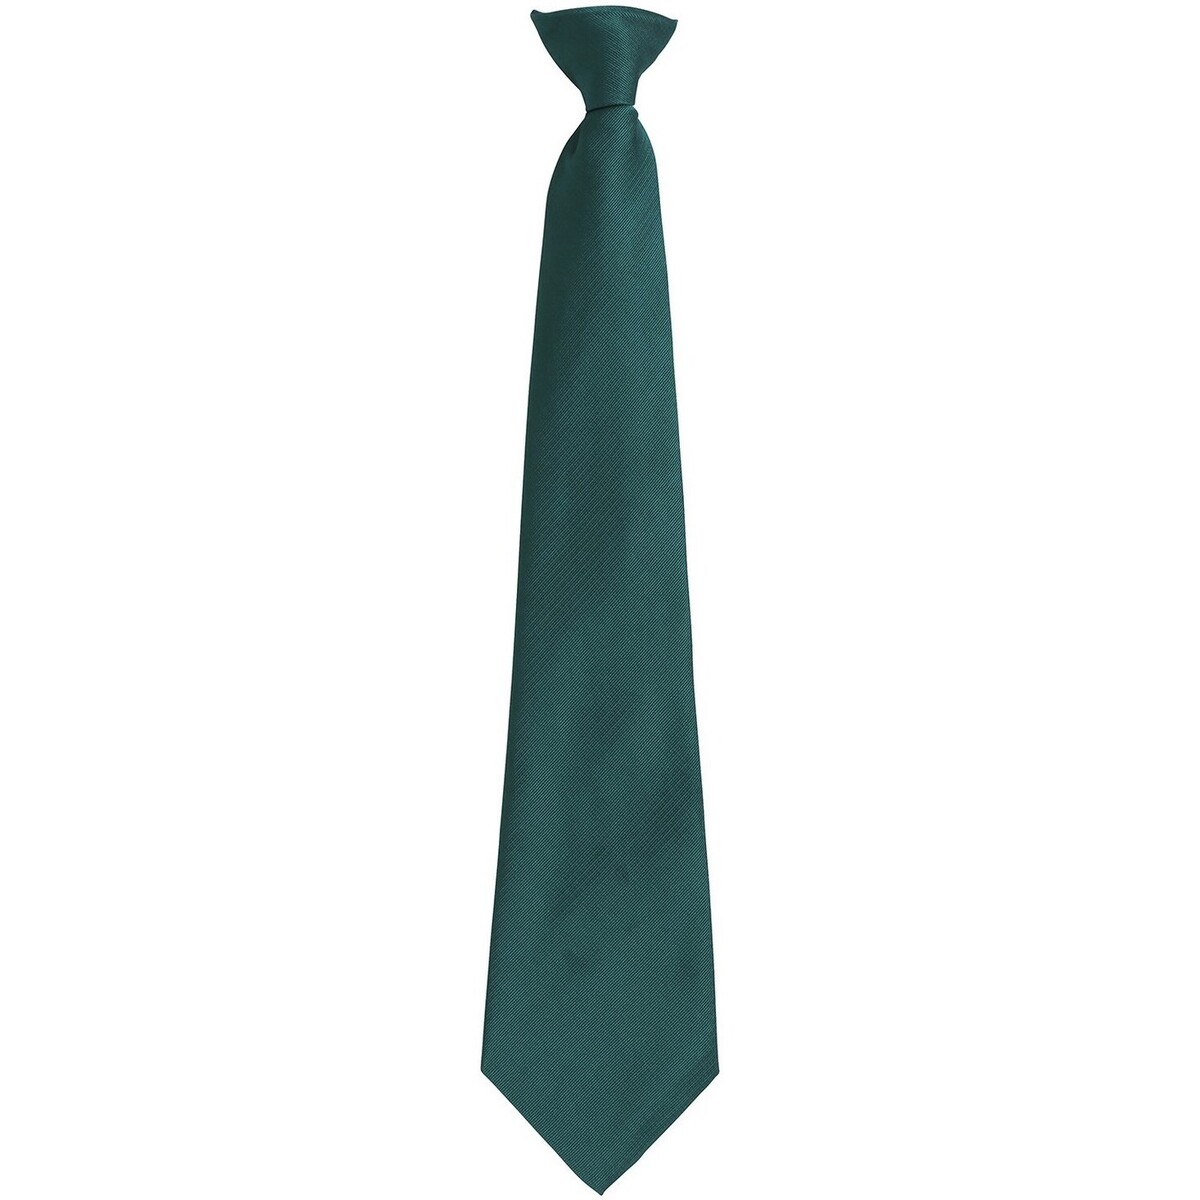 textil Corbatas y accesorios Premier Colours Fashion Verde